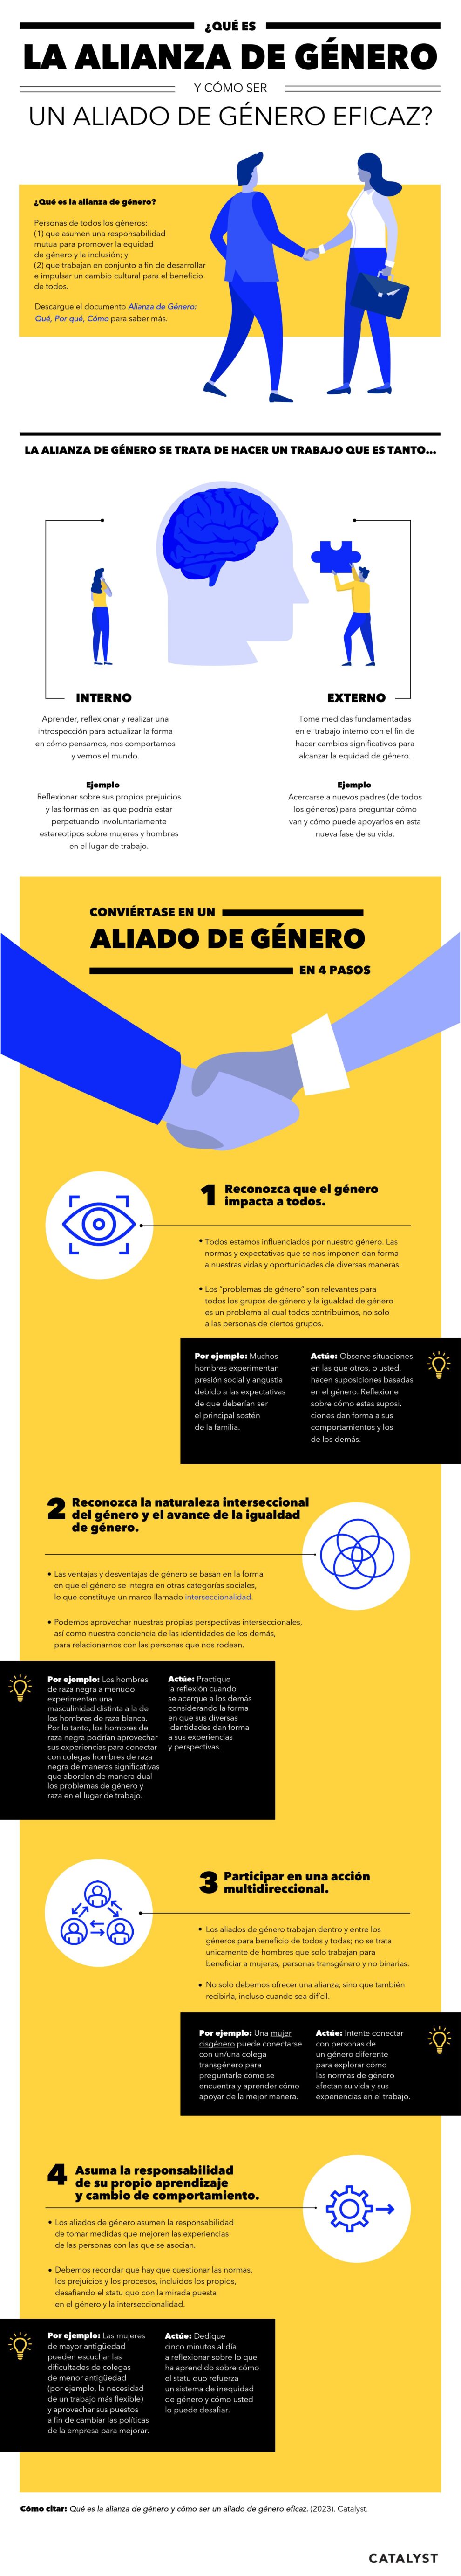 gender partnership infographic in spanish